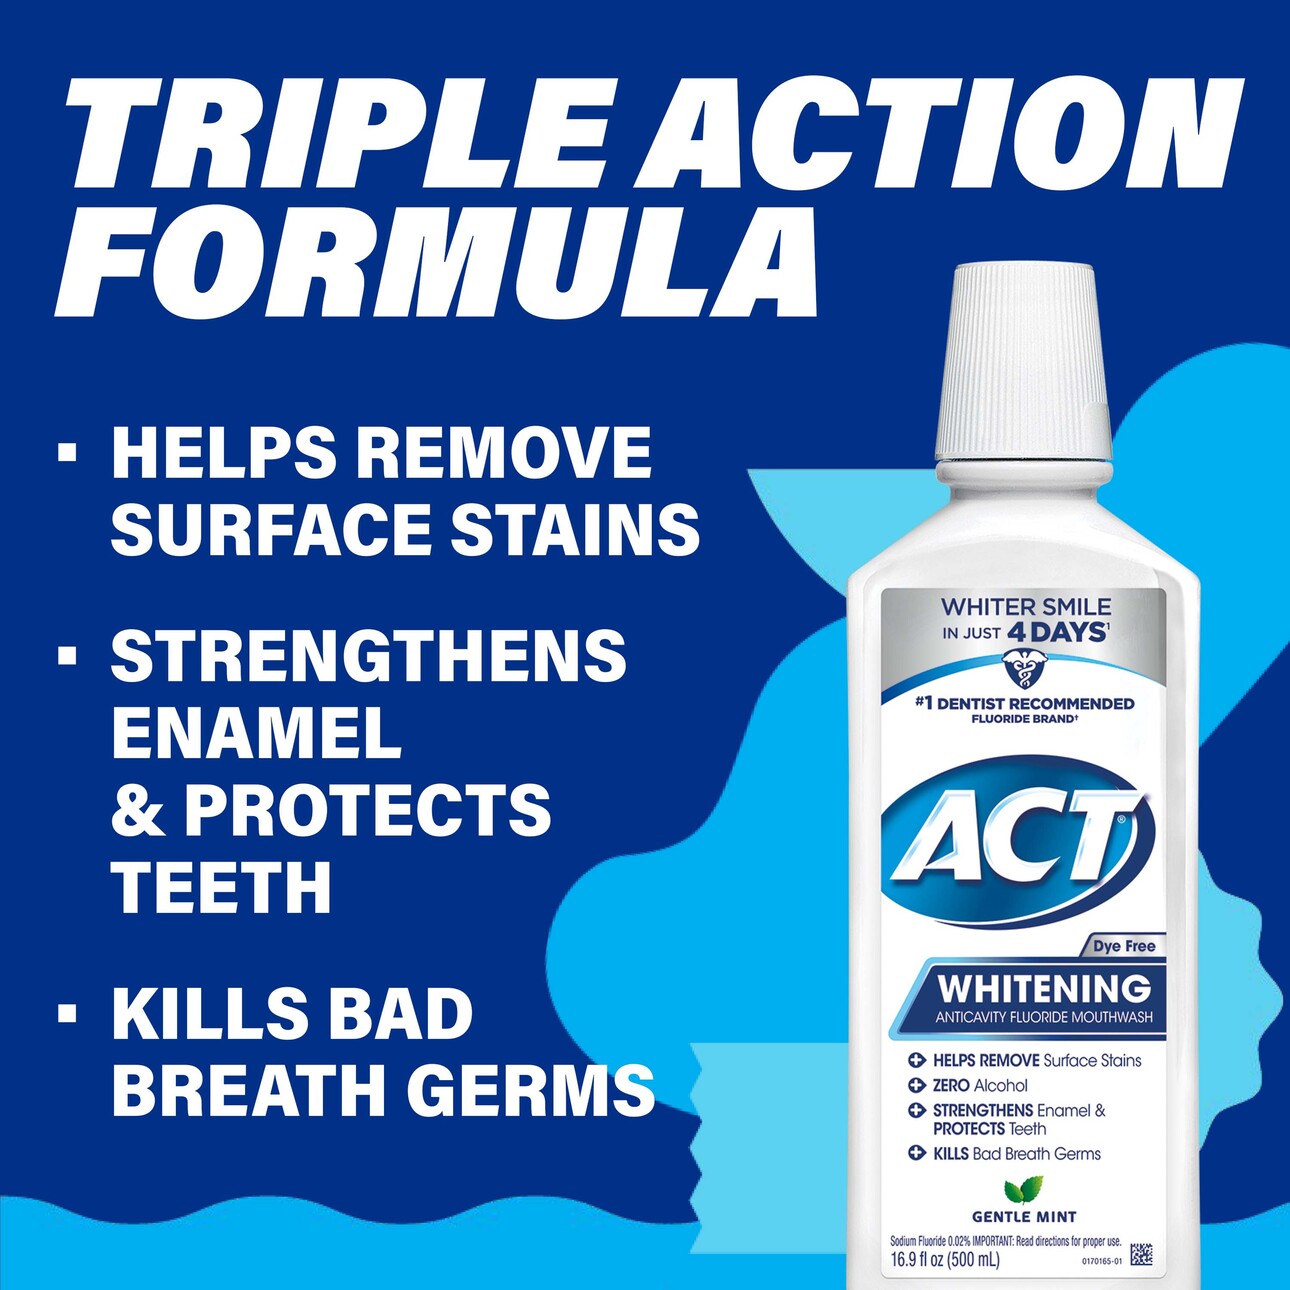 ACT Whitening + Anticavity Fluoride Mouthwash, Gentle Mint, Alcohol Free and Dye Free, 16.9 fl. oz. - image 7 of 9